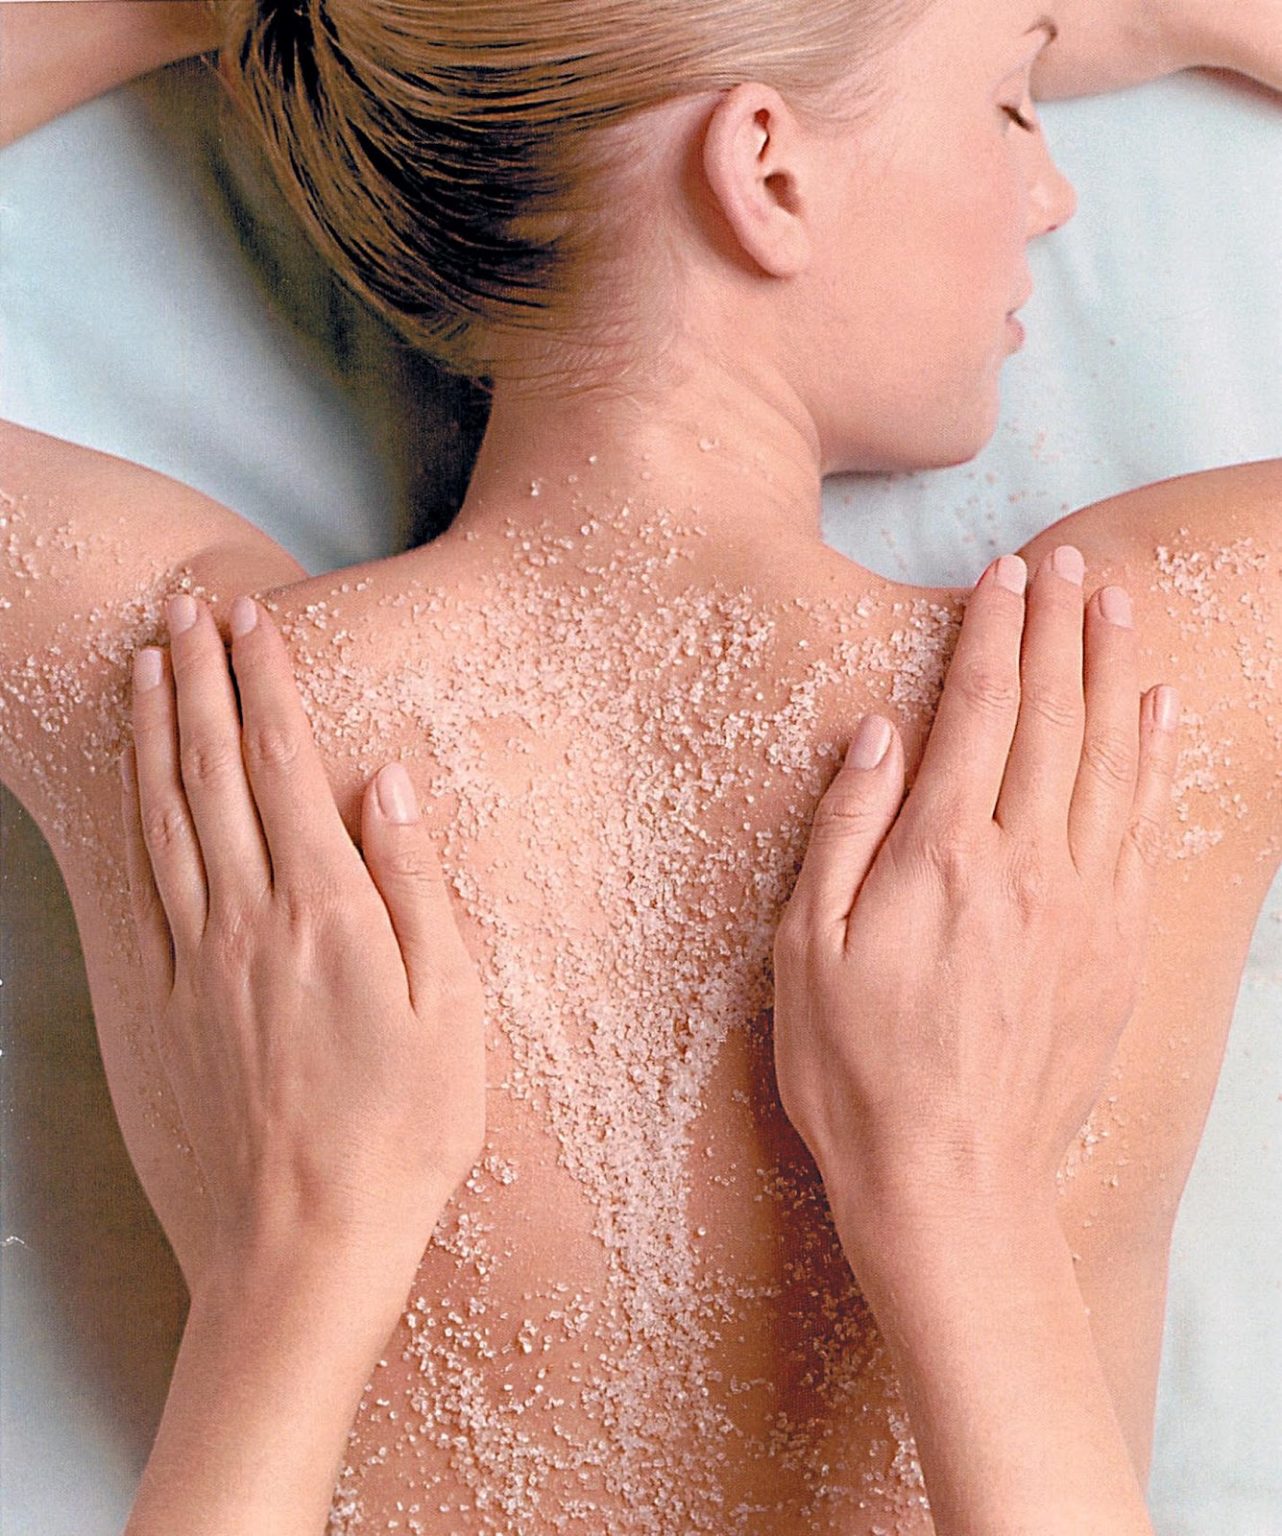 A woman having a bodyscrub during a spa day treatment